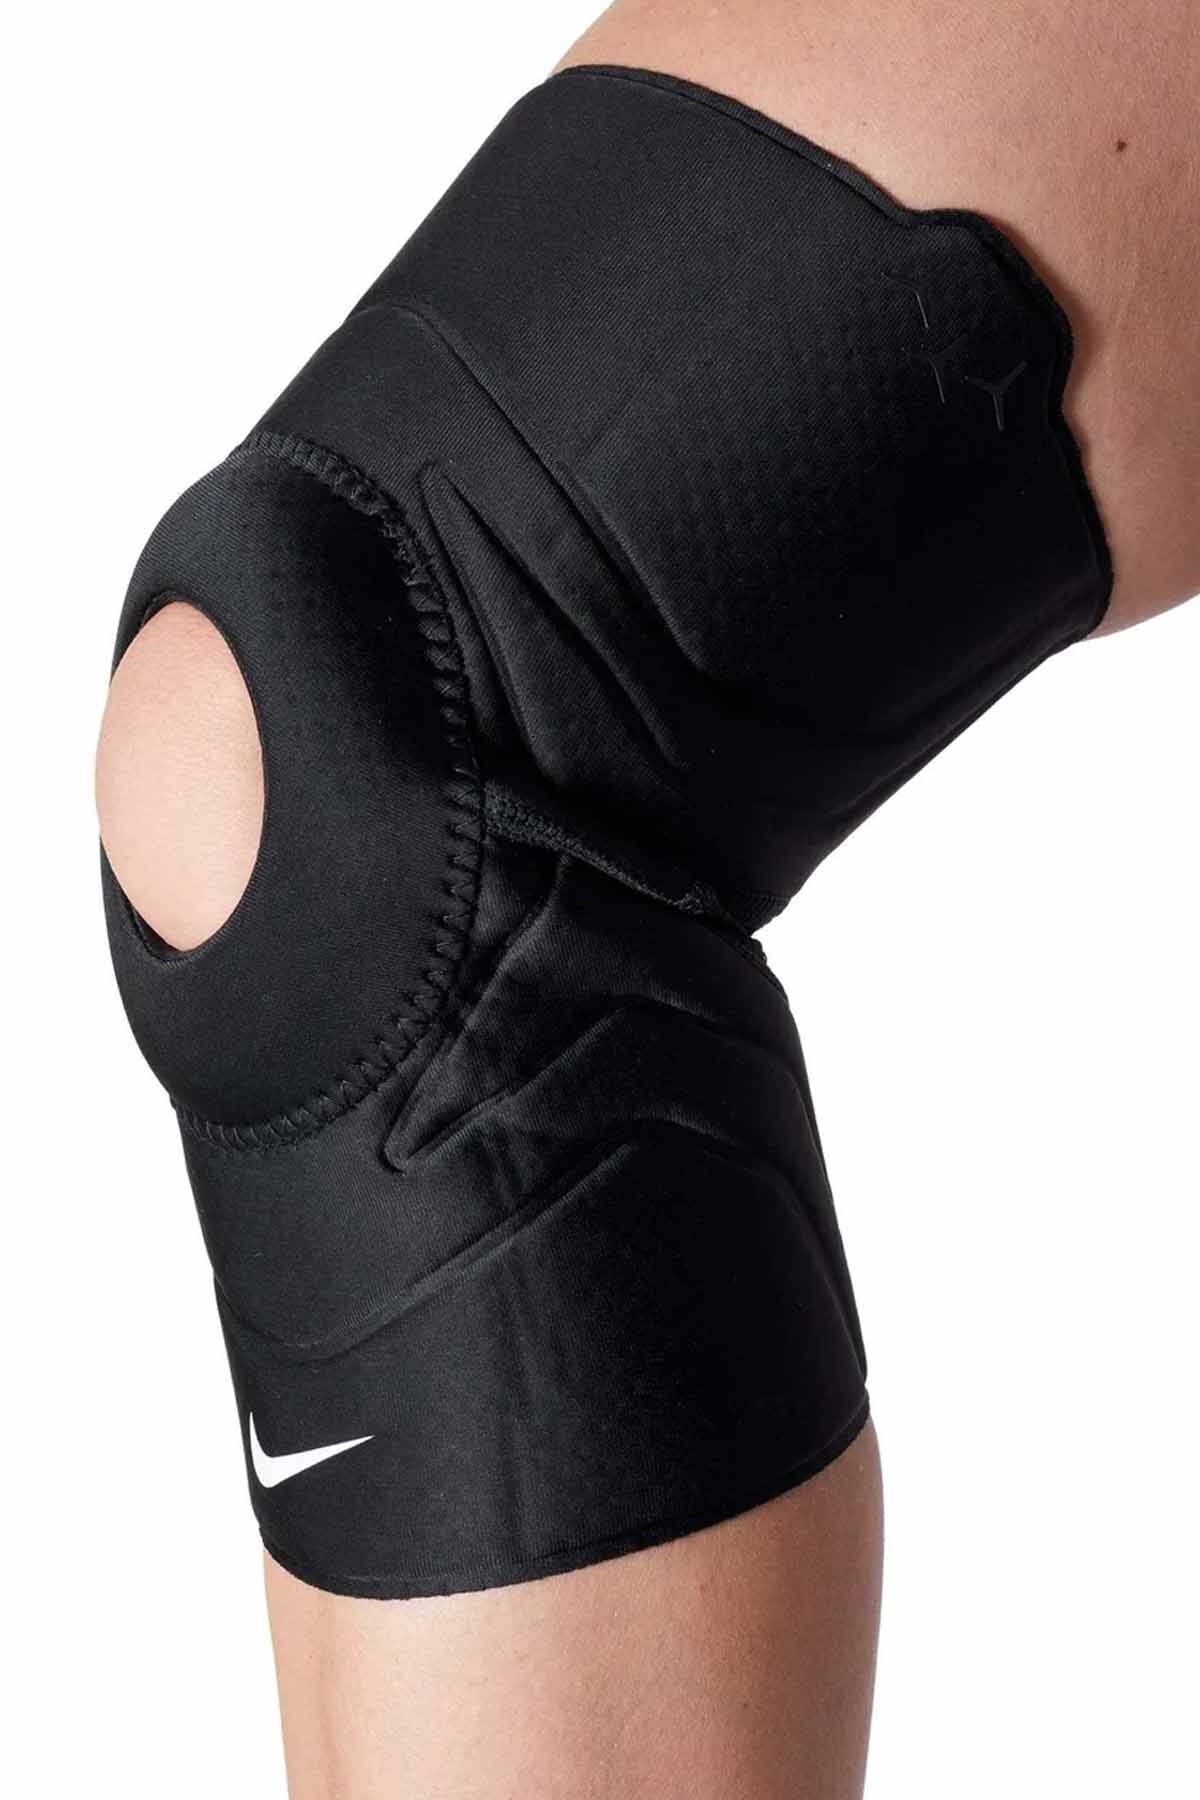 Nike Pro Open Patella Knee Sleeve 3.0 Unisex Voleybol Dizliği N.100.0675.010-siyah